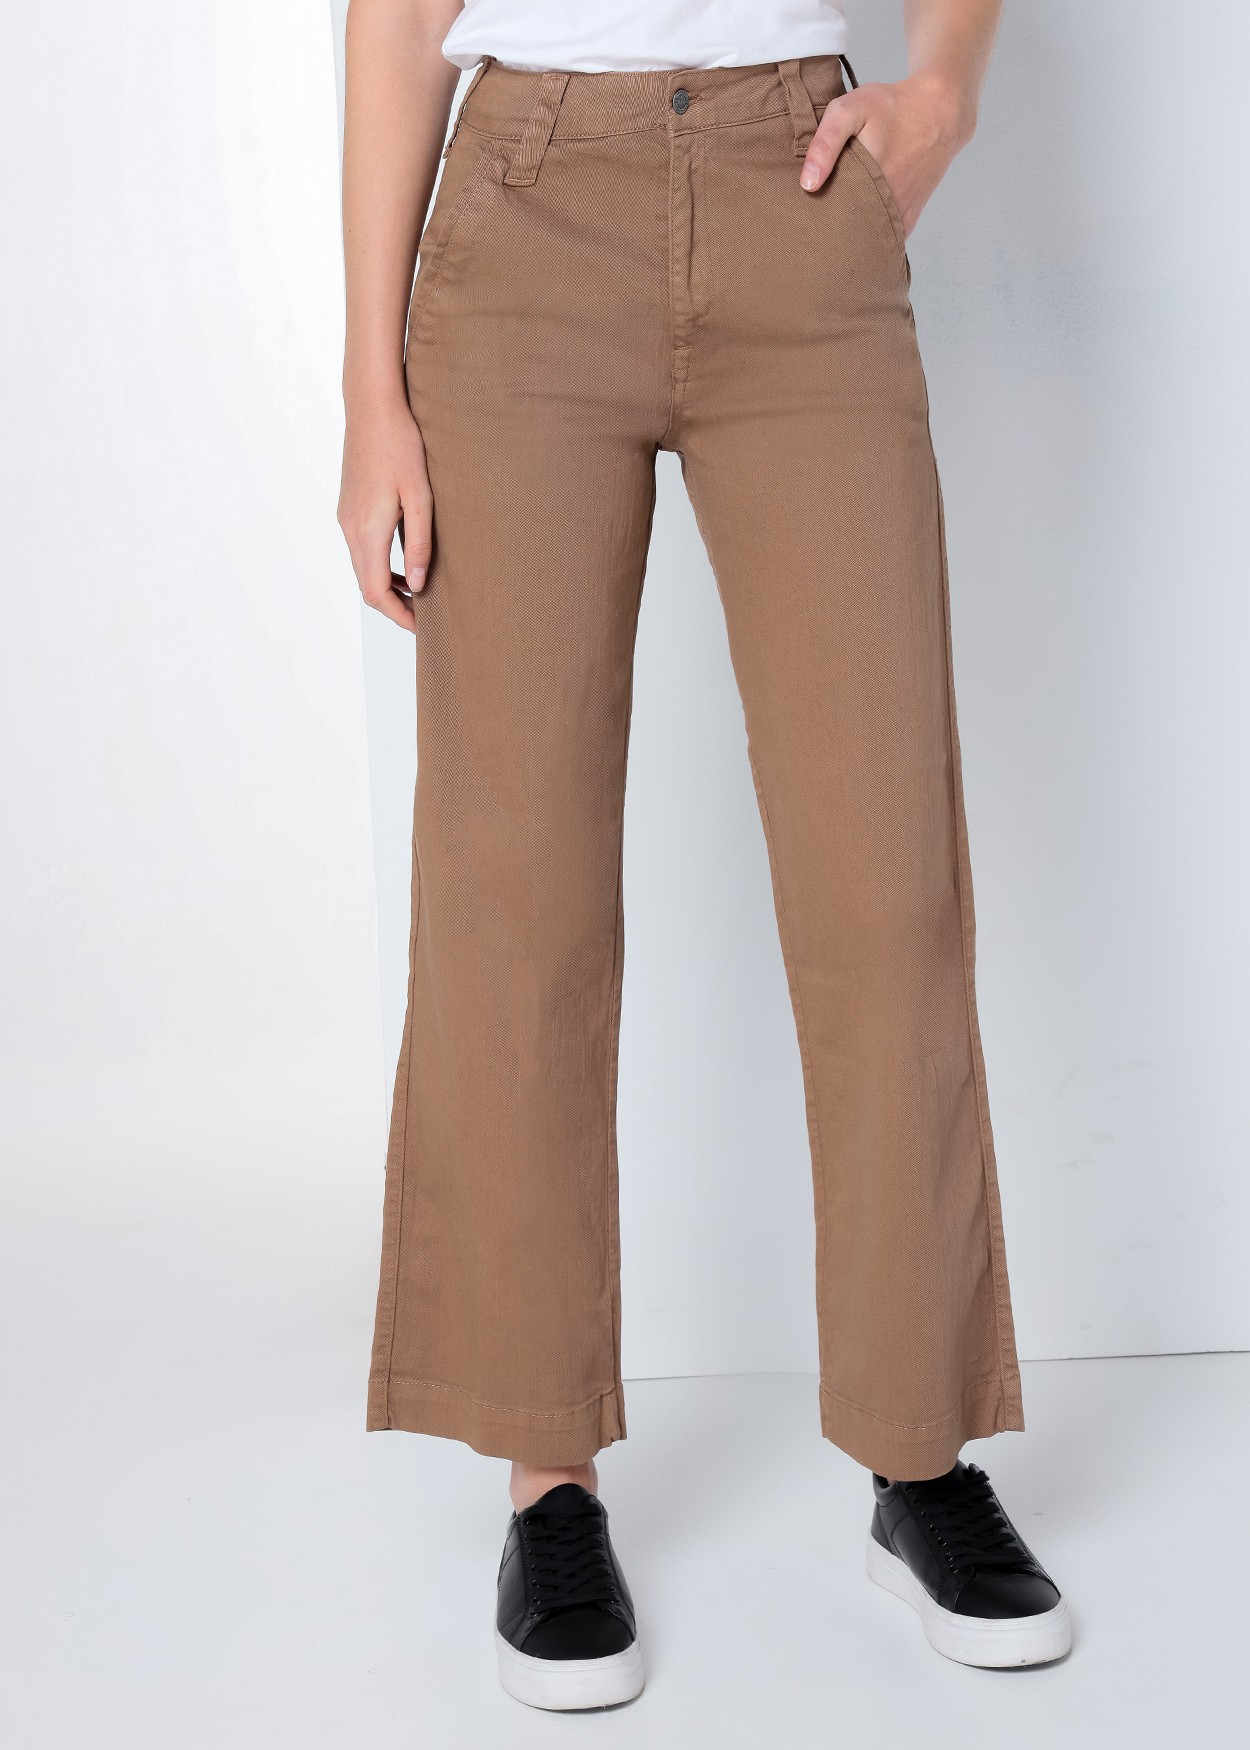 OLIVIA LILOU -Pantalon Chino |Taille Moyenne- Jambe Ample Droite | Taille en pouces